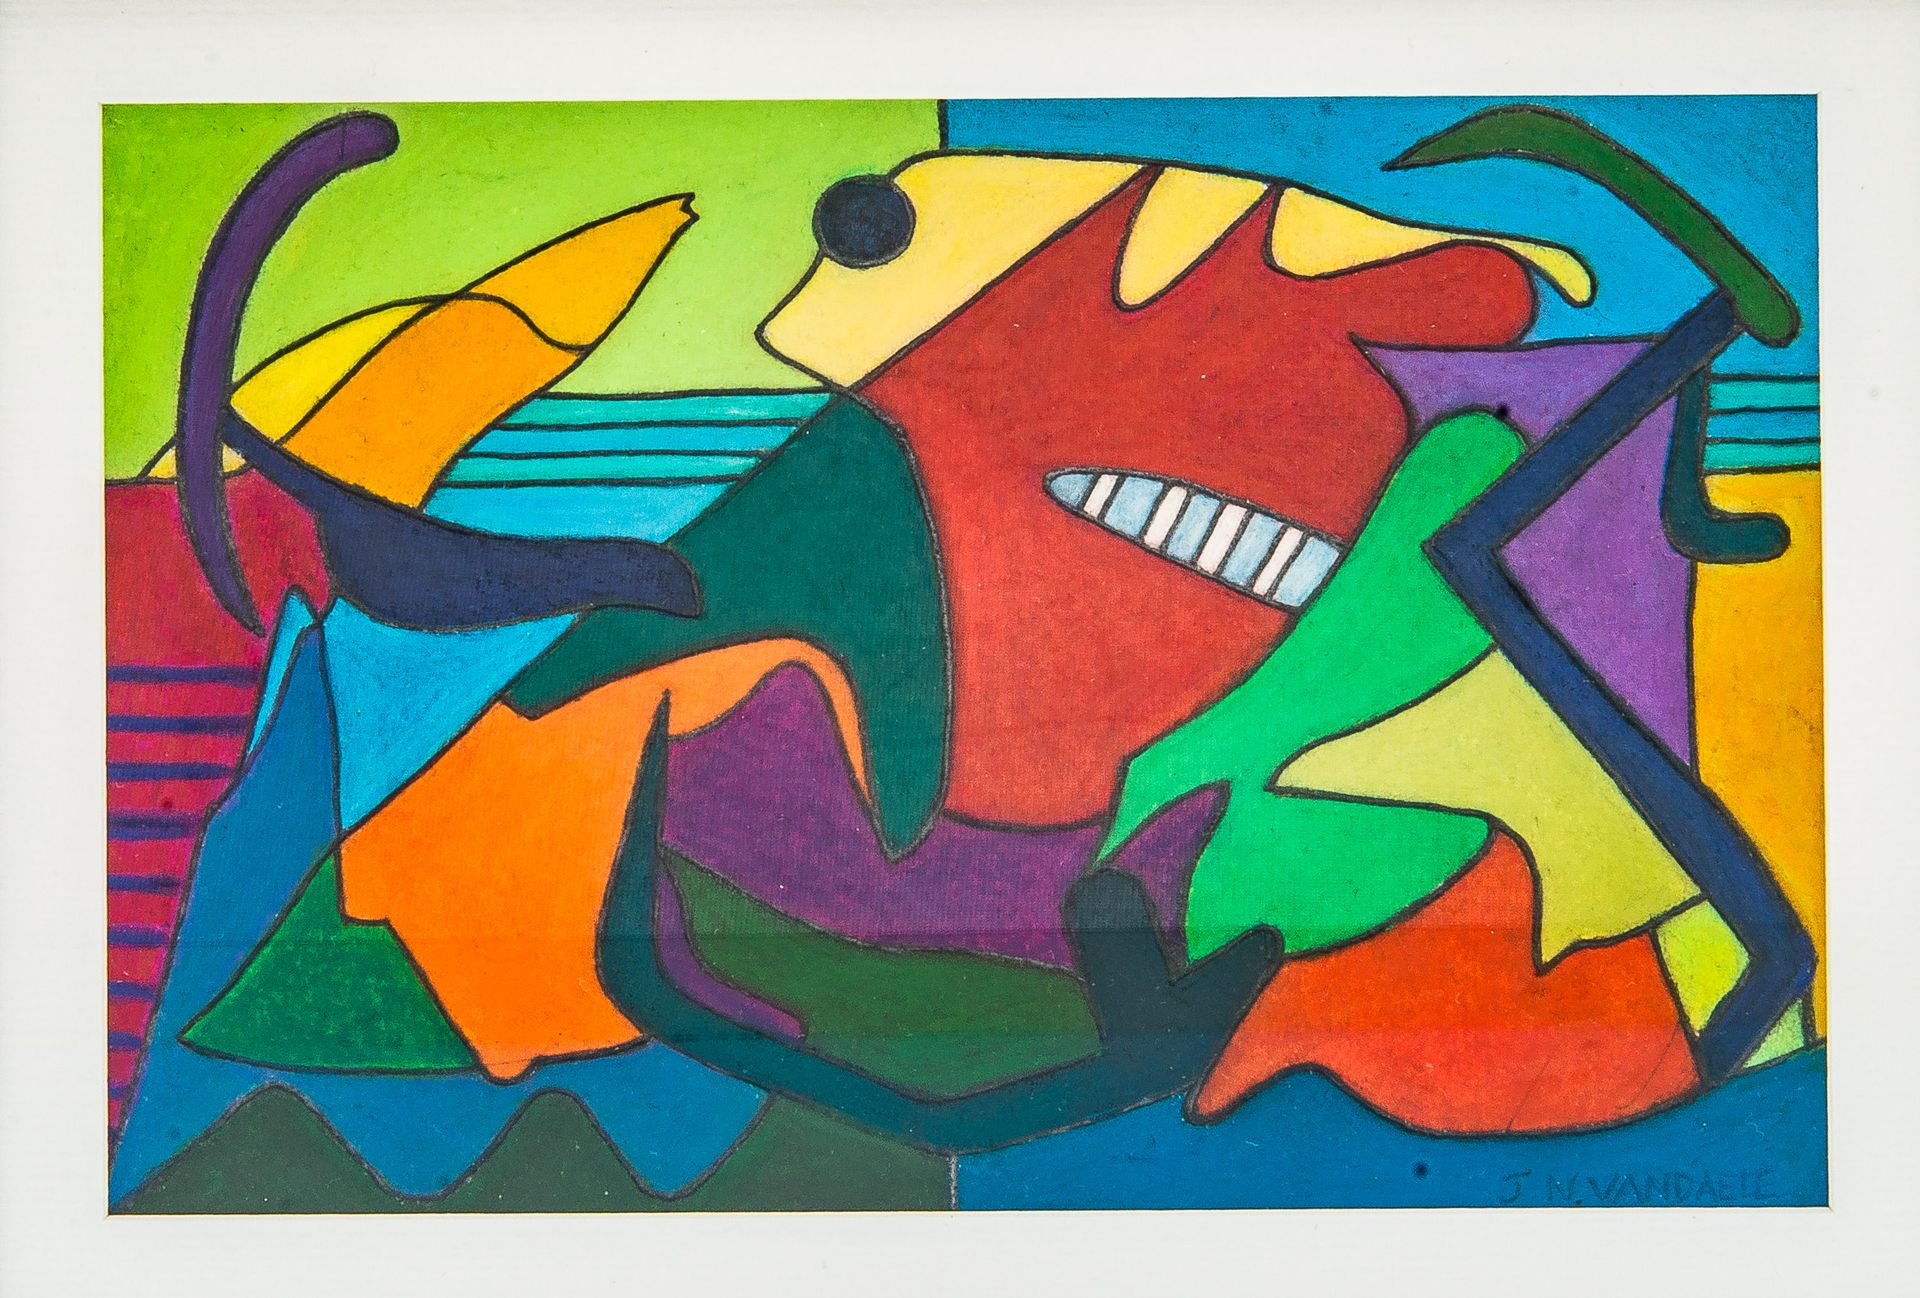 Null 让-诺埃尔-范达莱 (1952) 
美国抽象（第52号），2008年
水墨、水彩和彩色铅笔，右下角有签名。
尺寸：11 x 17 cm

附有Chri&hellip;